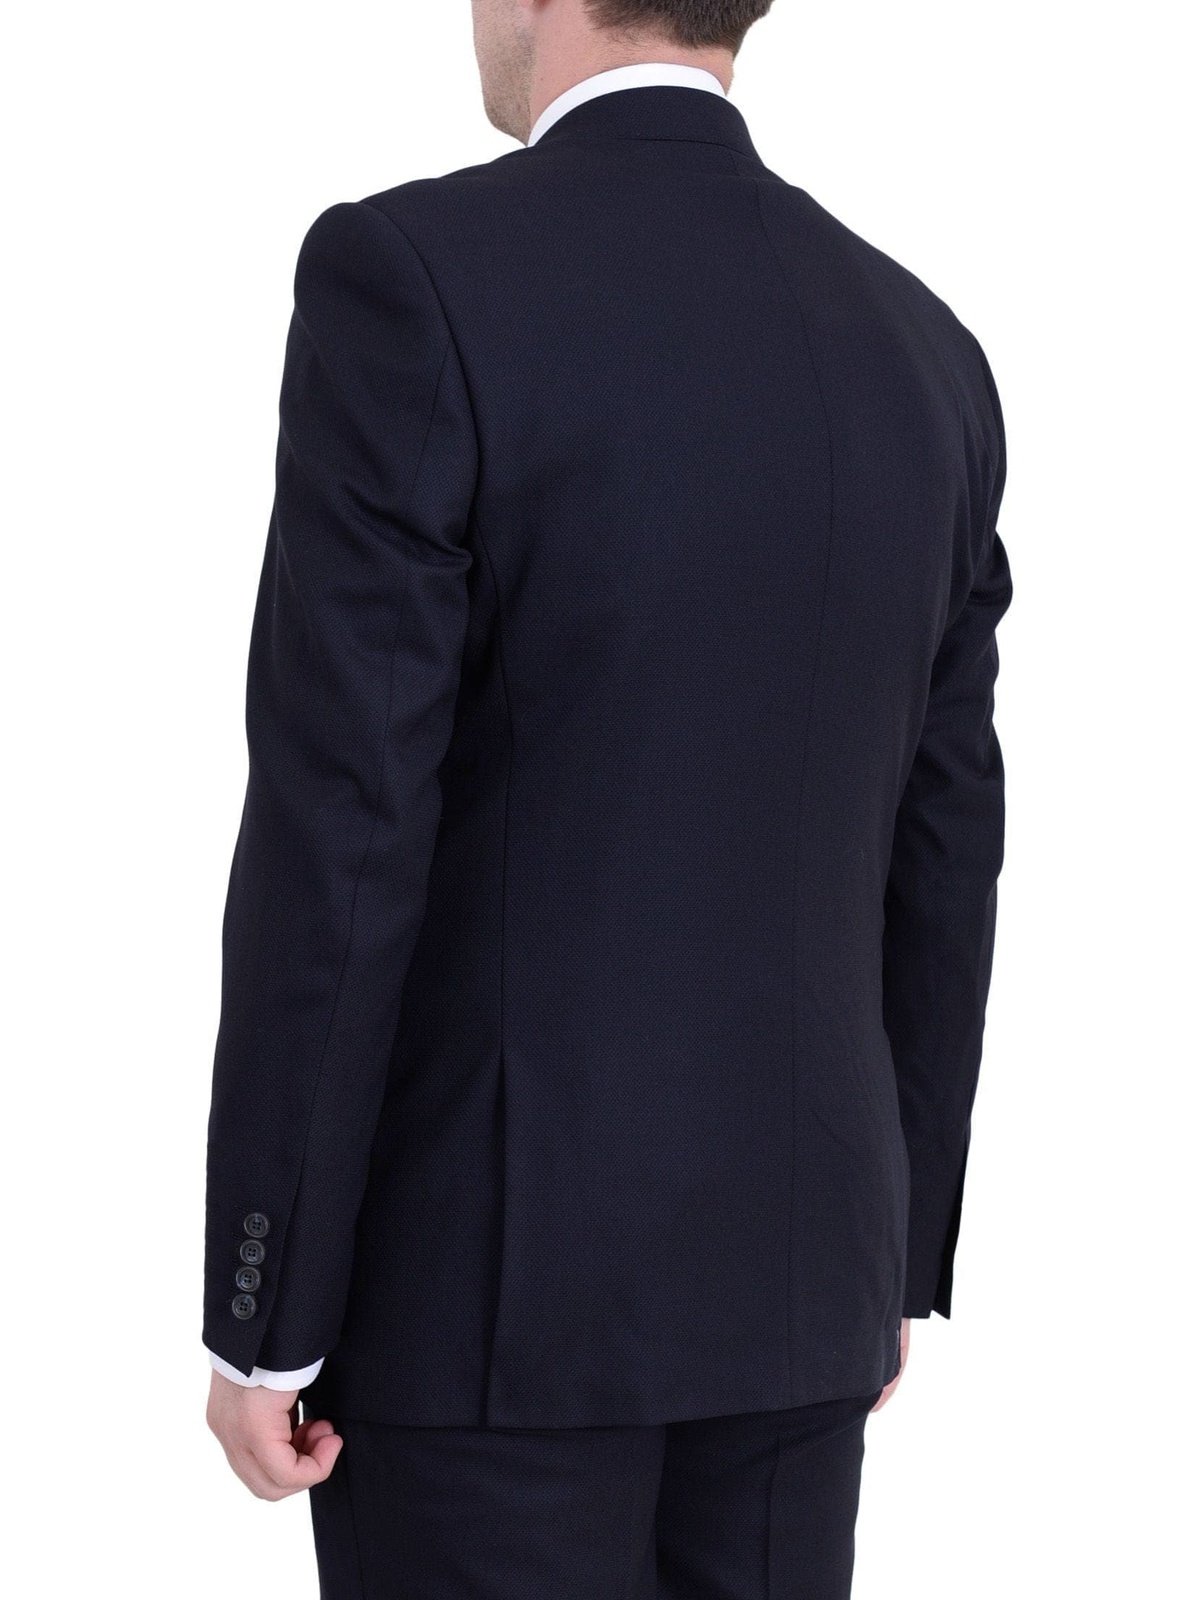 Raphael TWO PIECE SUITS Raphael Slim Fit Navy Blue Textured Two Button Wool Suit